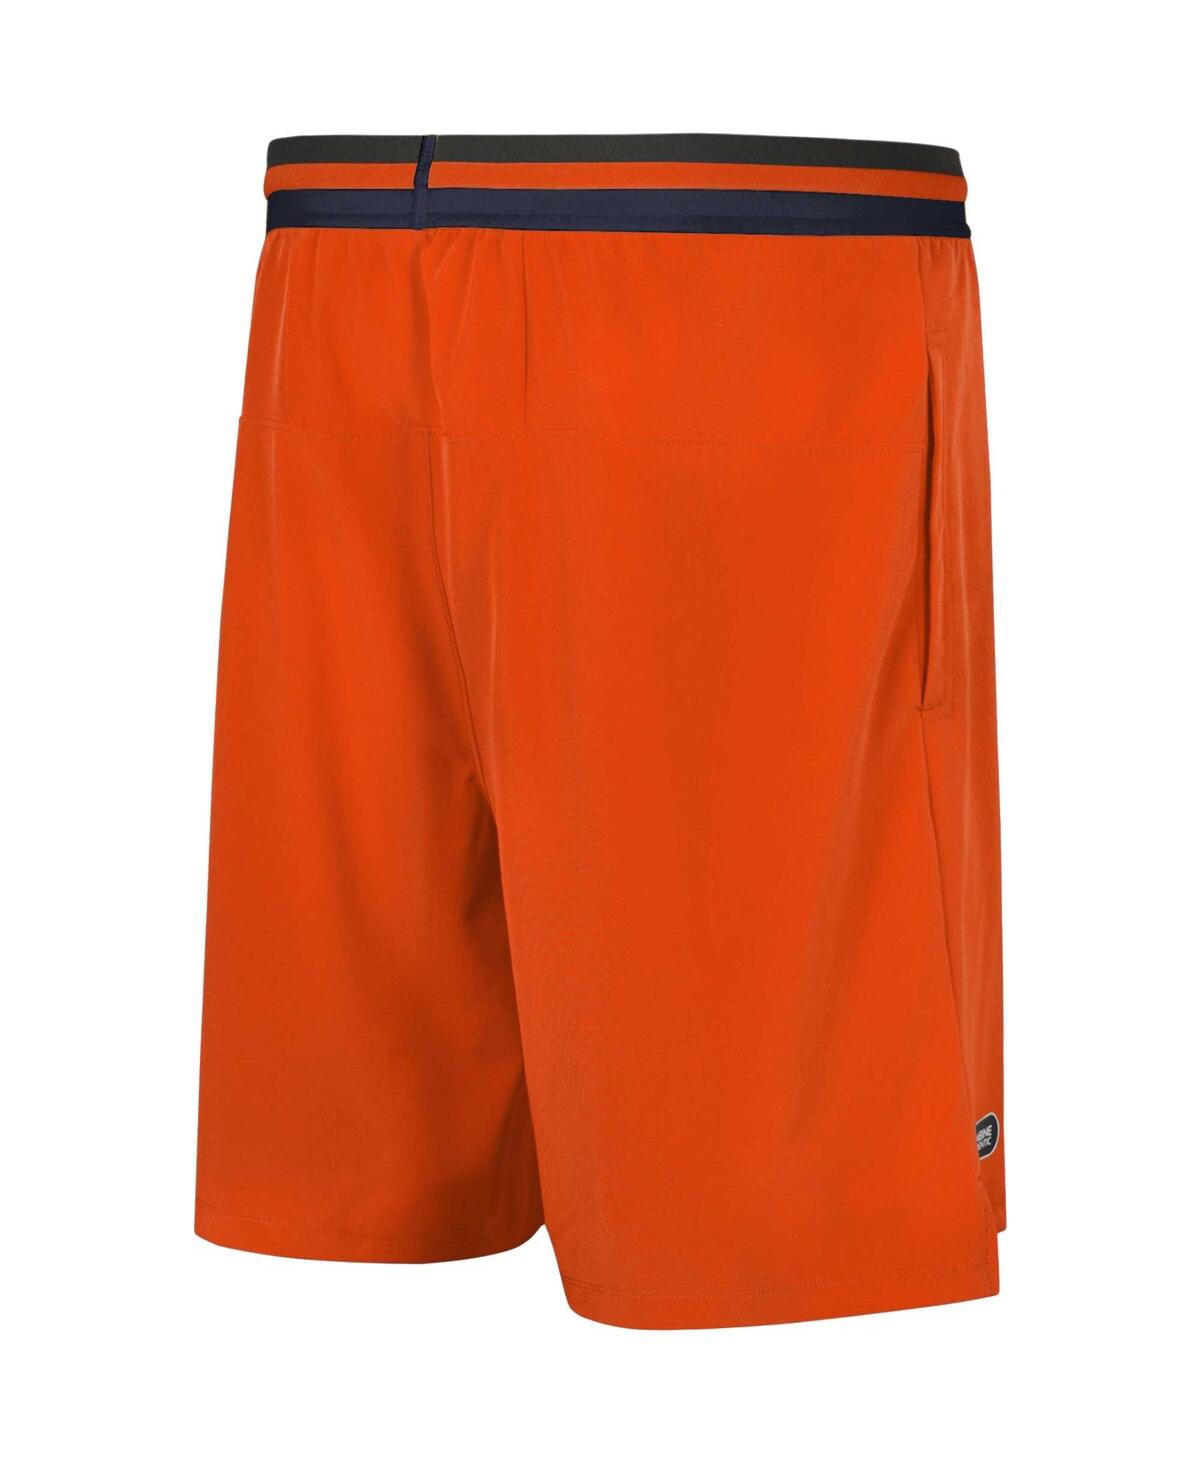 Shop Outerstuff Men's Orange Denver Broncos Cool Down Tri-color Elastic Training Shorts